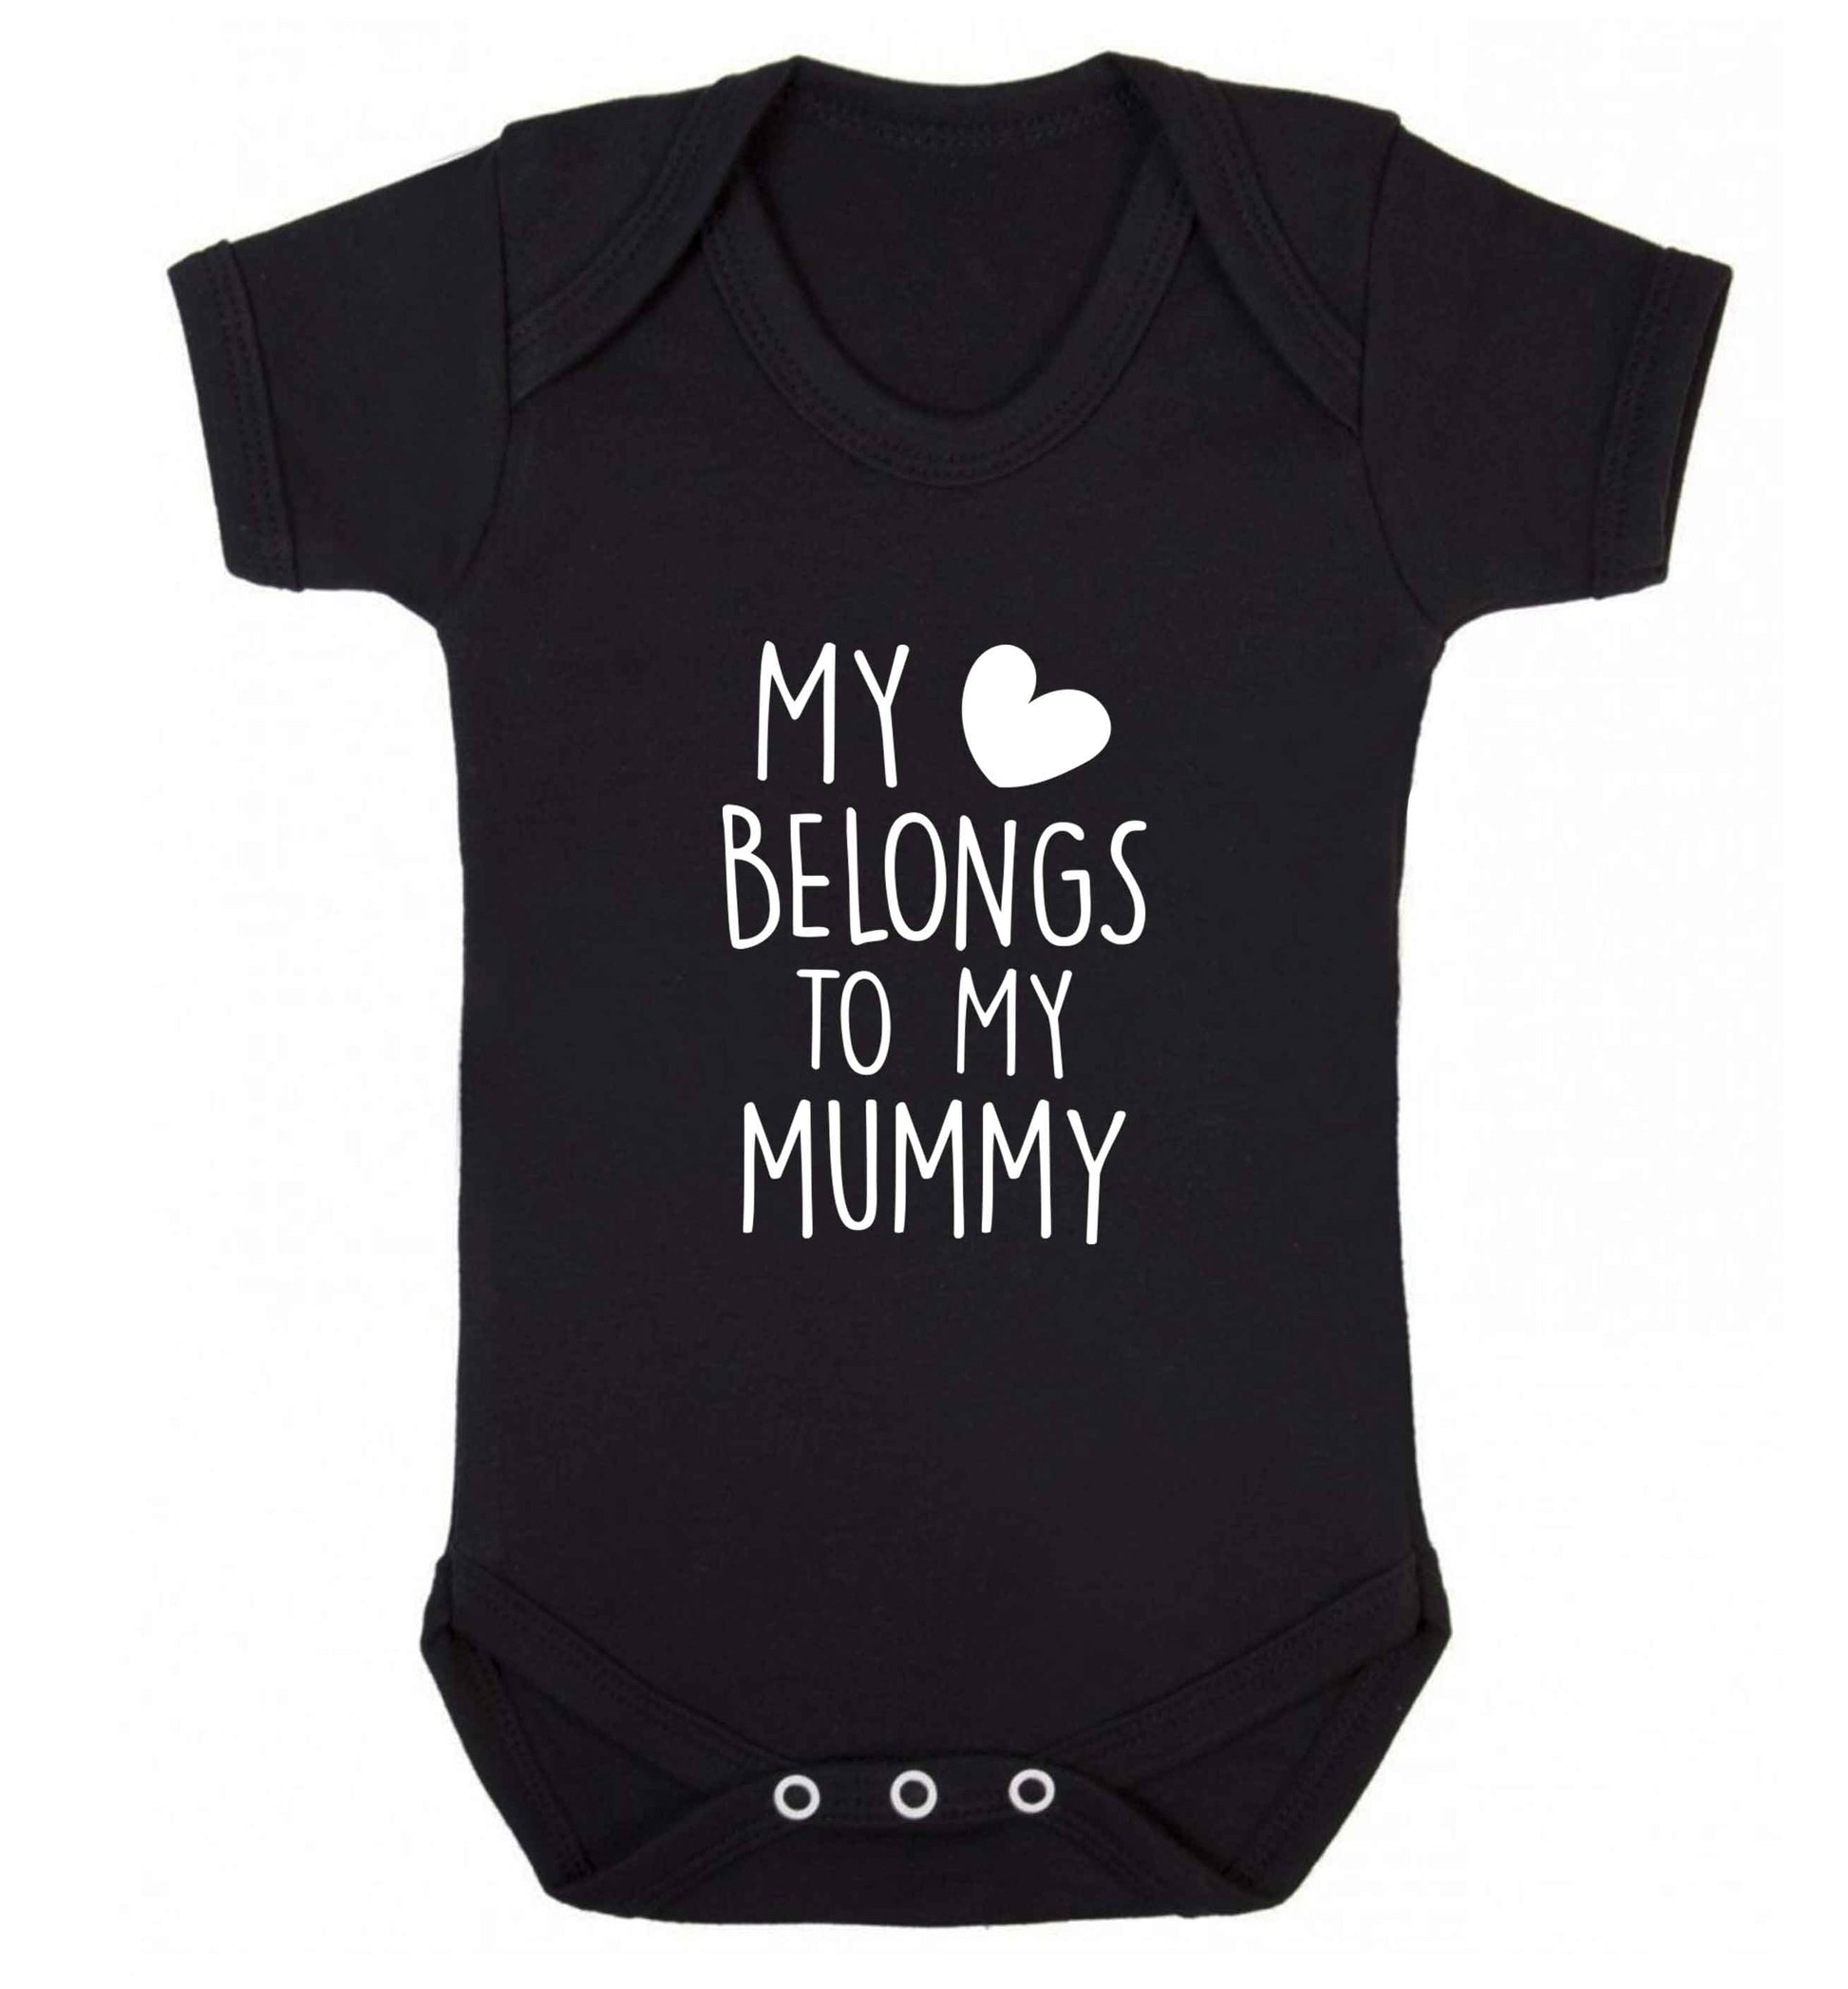 My heart belongs to my mummy baby vest black 18-24 months